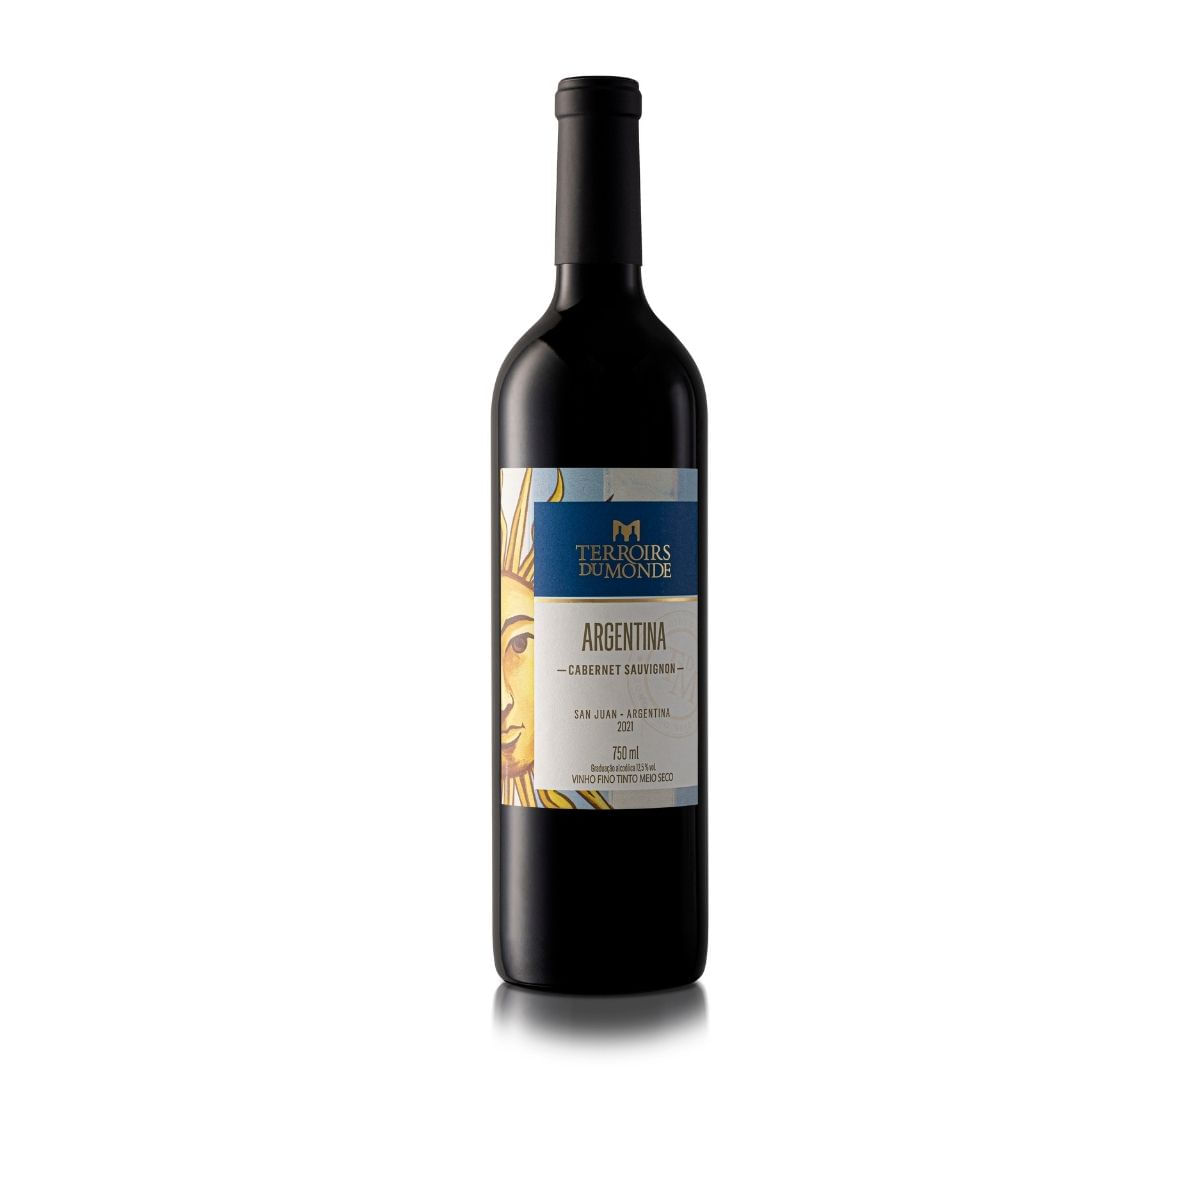 Vinho Argentino Cabernet Sauvignon Buenardo 750ml Mambo